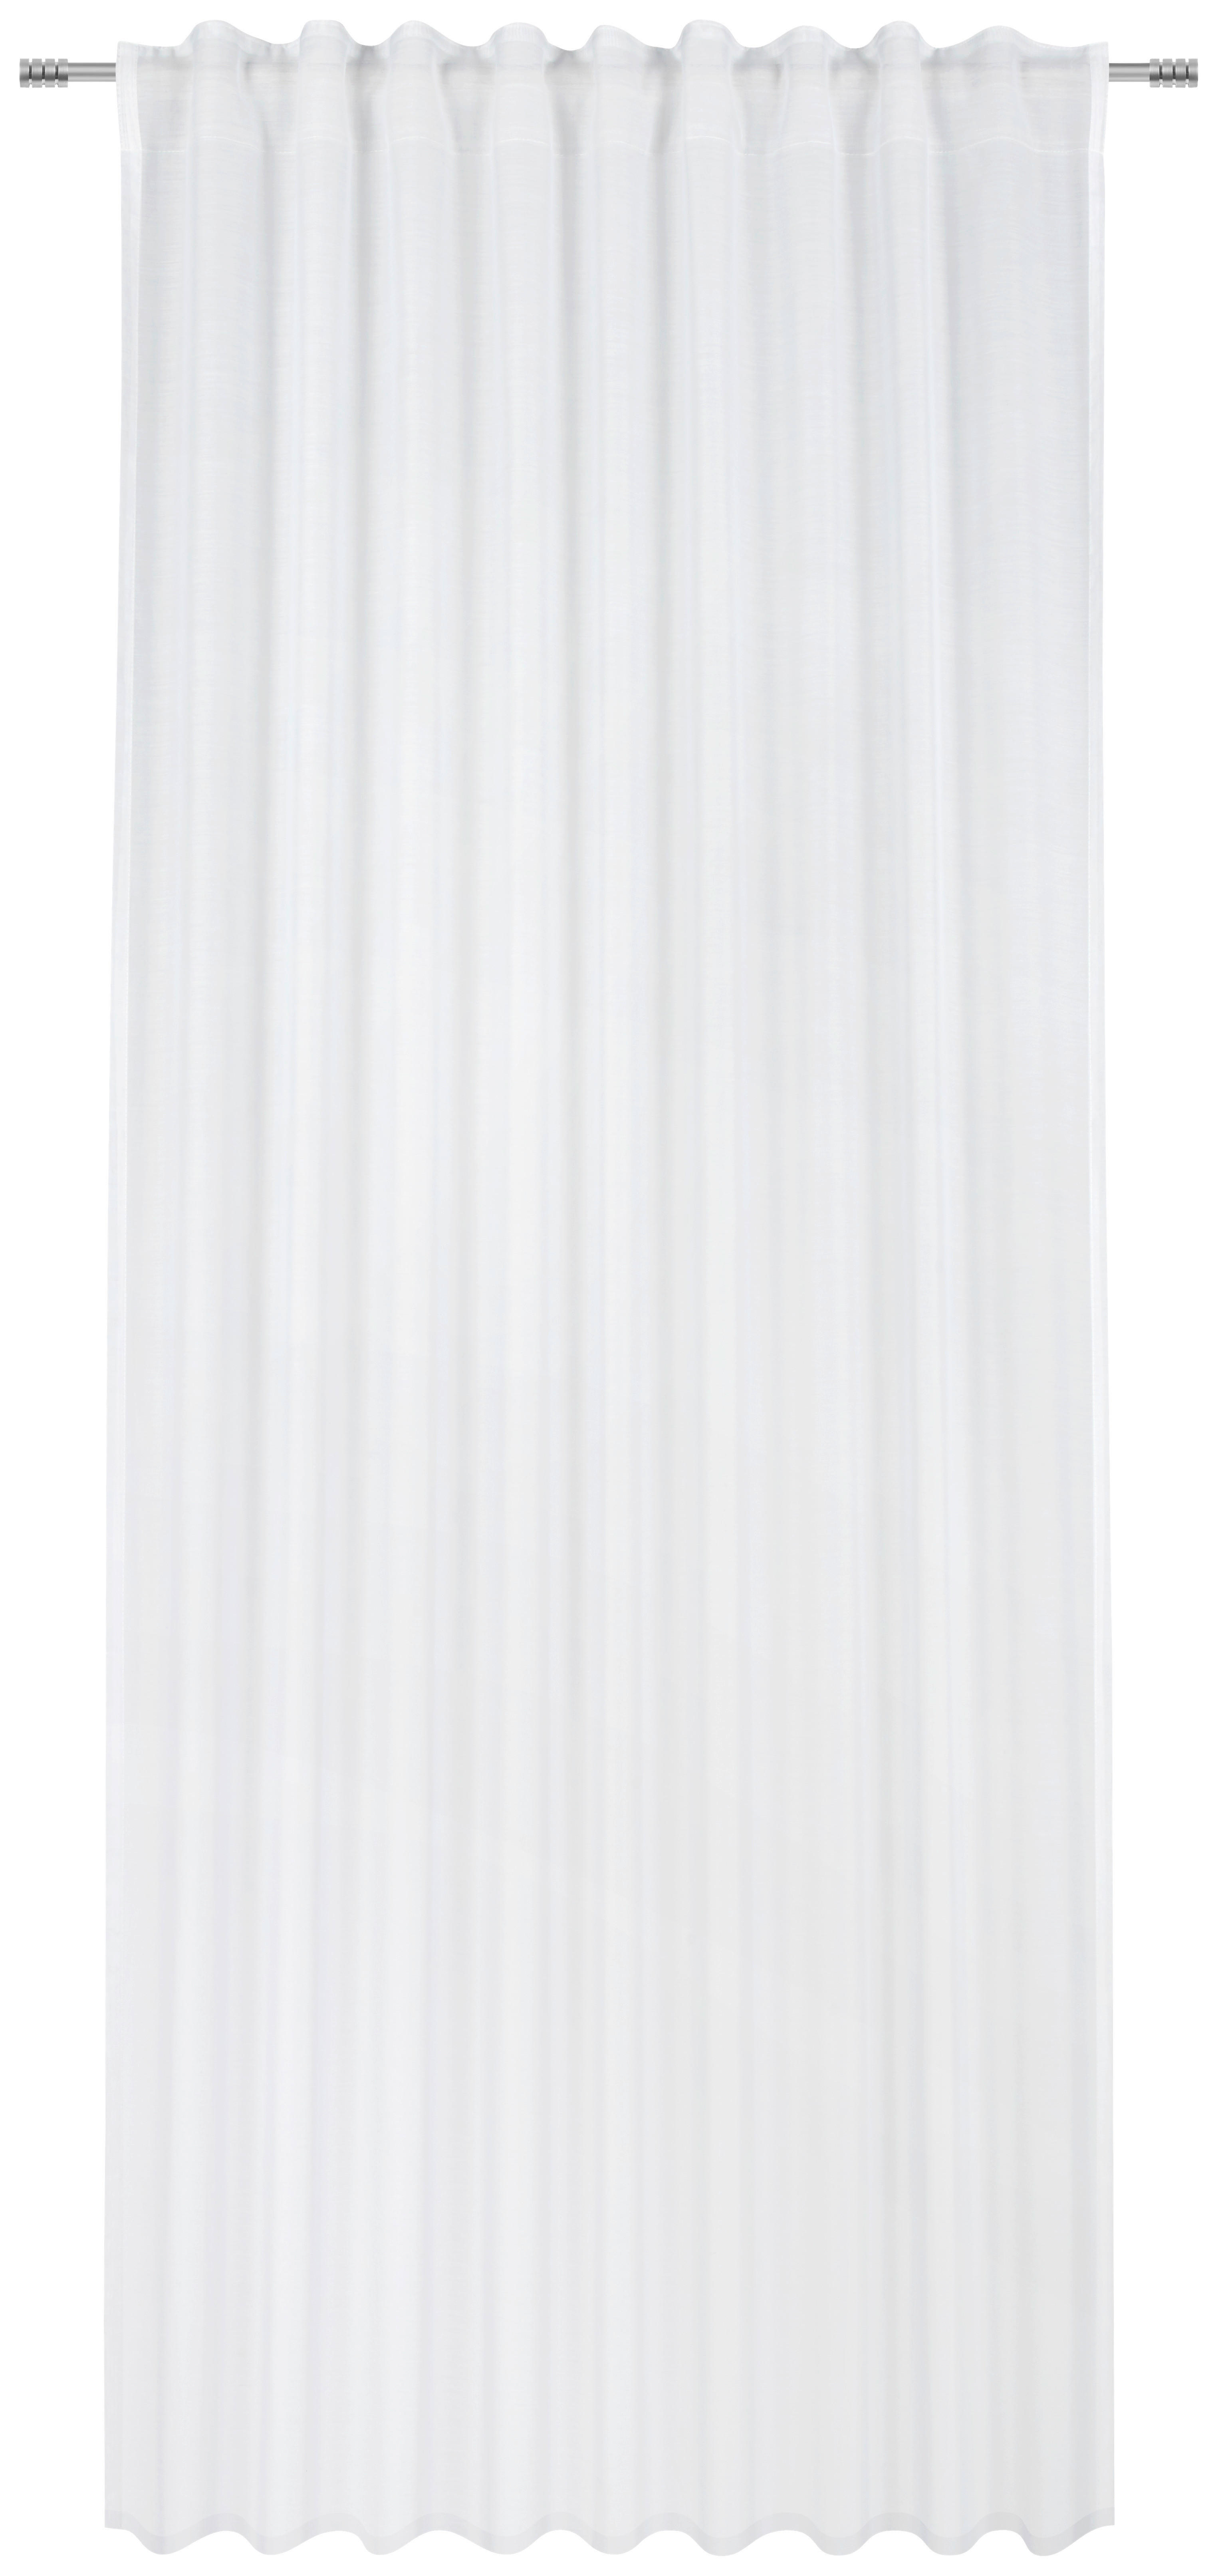 FERTIGVORHANG BATIST transparent 140/245 cm   - Weiß, KONVENTIONELL, Textil (140/245cm) - Esposa